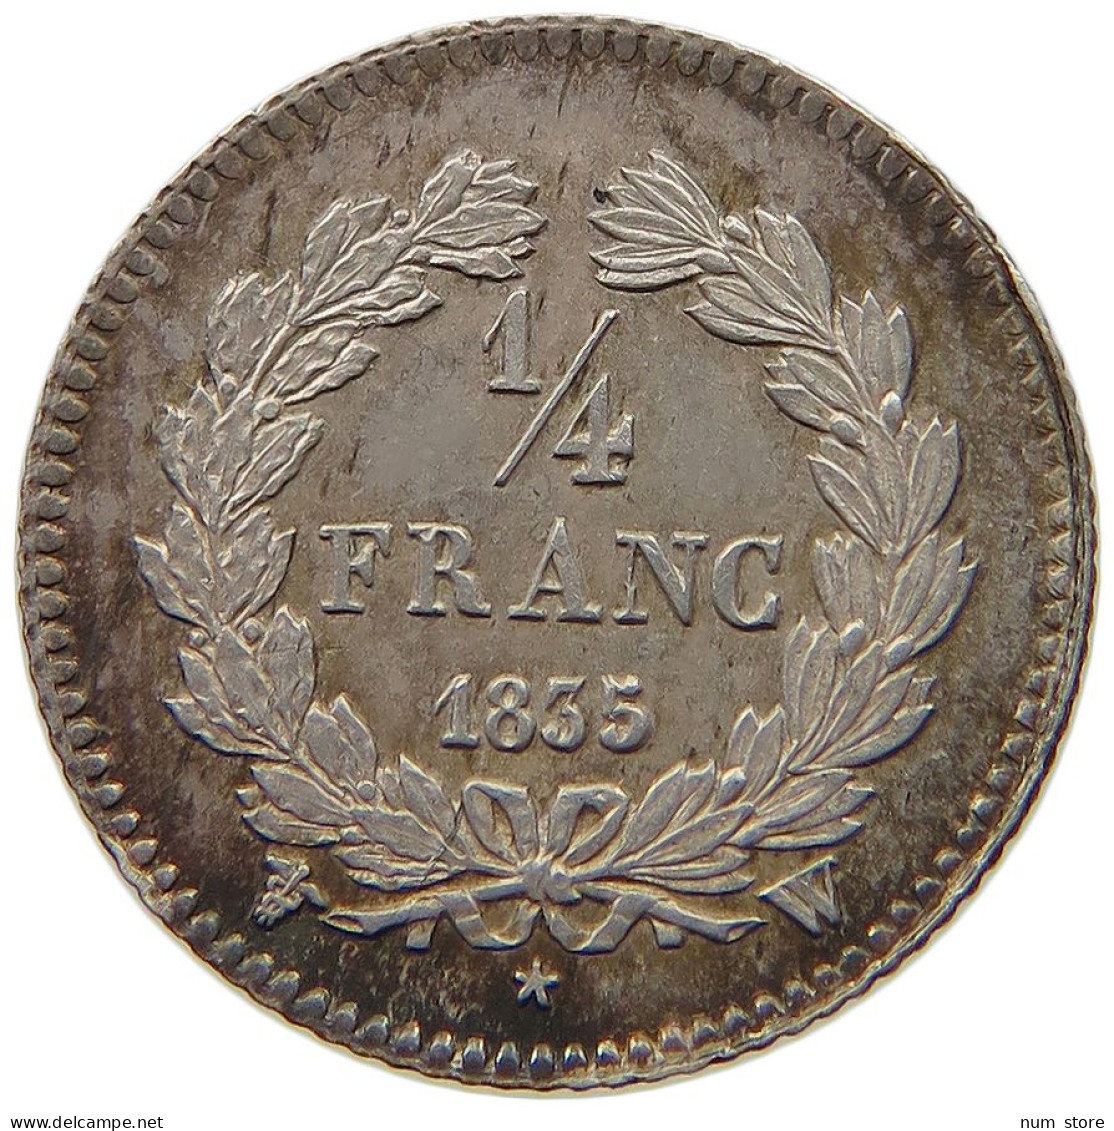 FRANCE 1/4 FRANC 1835 W LILLE LOUIS PHILIPPE I. (1830-1848) #t058 0275 - 1/4 Franc